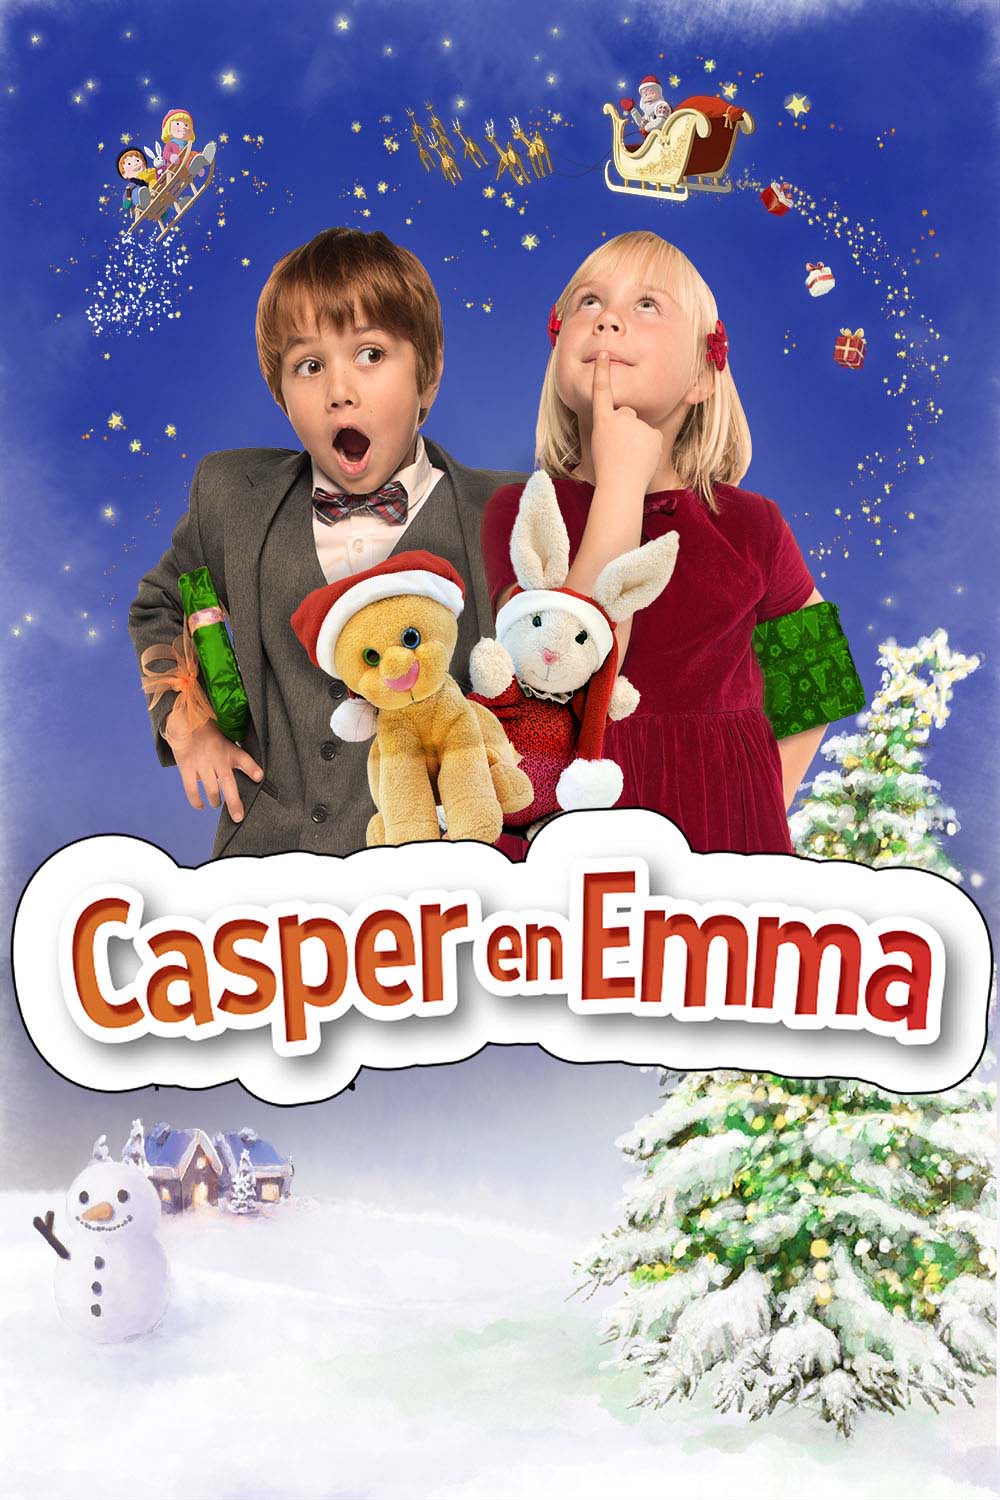 Casper and Emma Christmas party